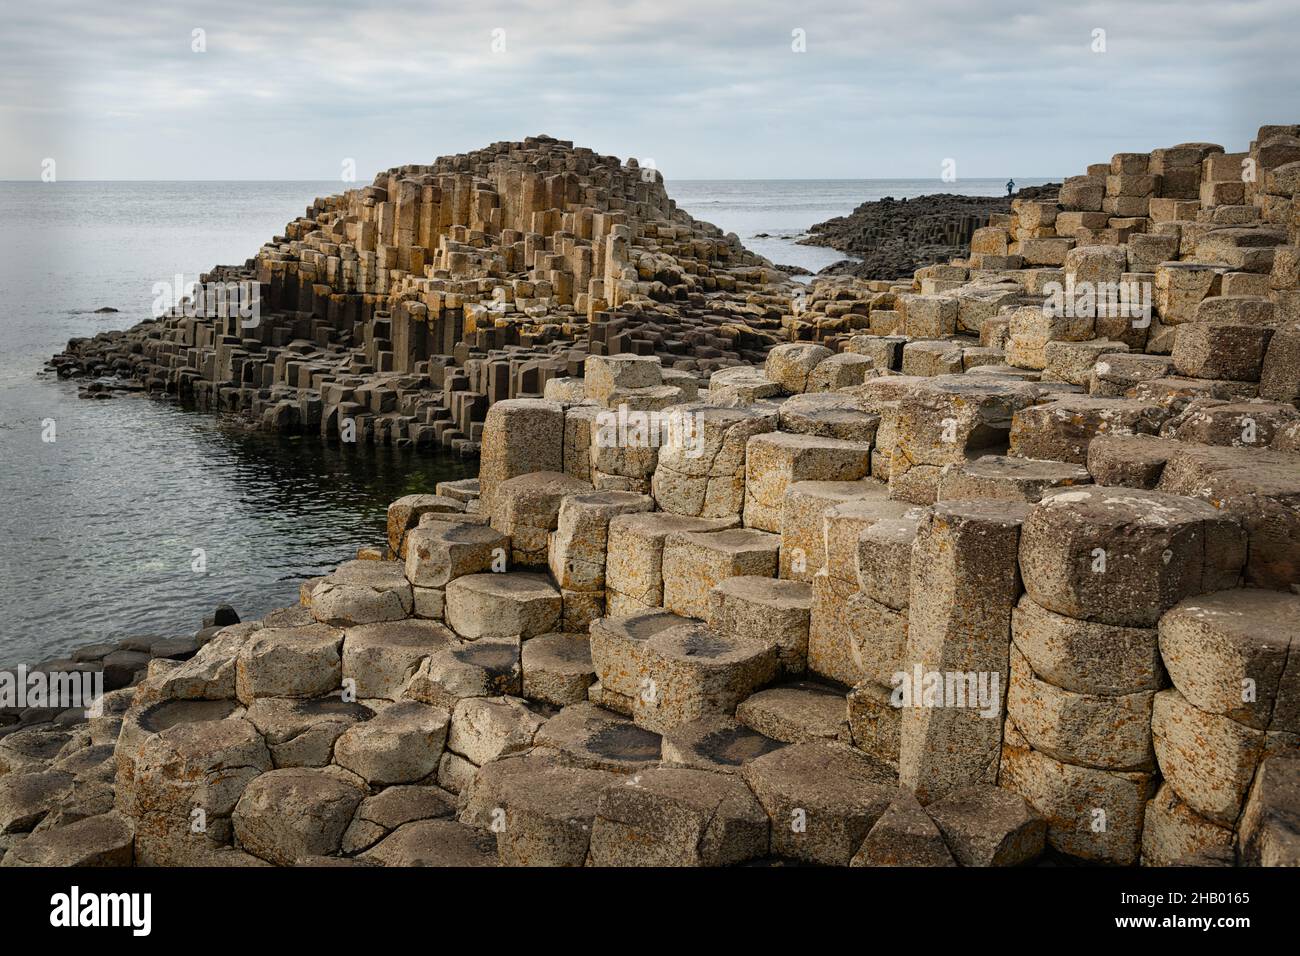 The Giant’s Causeway (40,000 interlocking basalt columns), County Antrim, Northern Ireland, UK Stock Photo